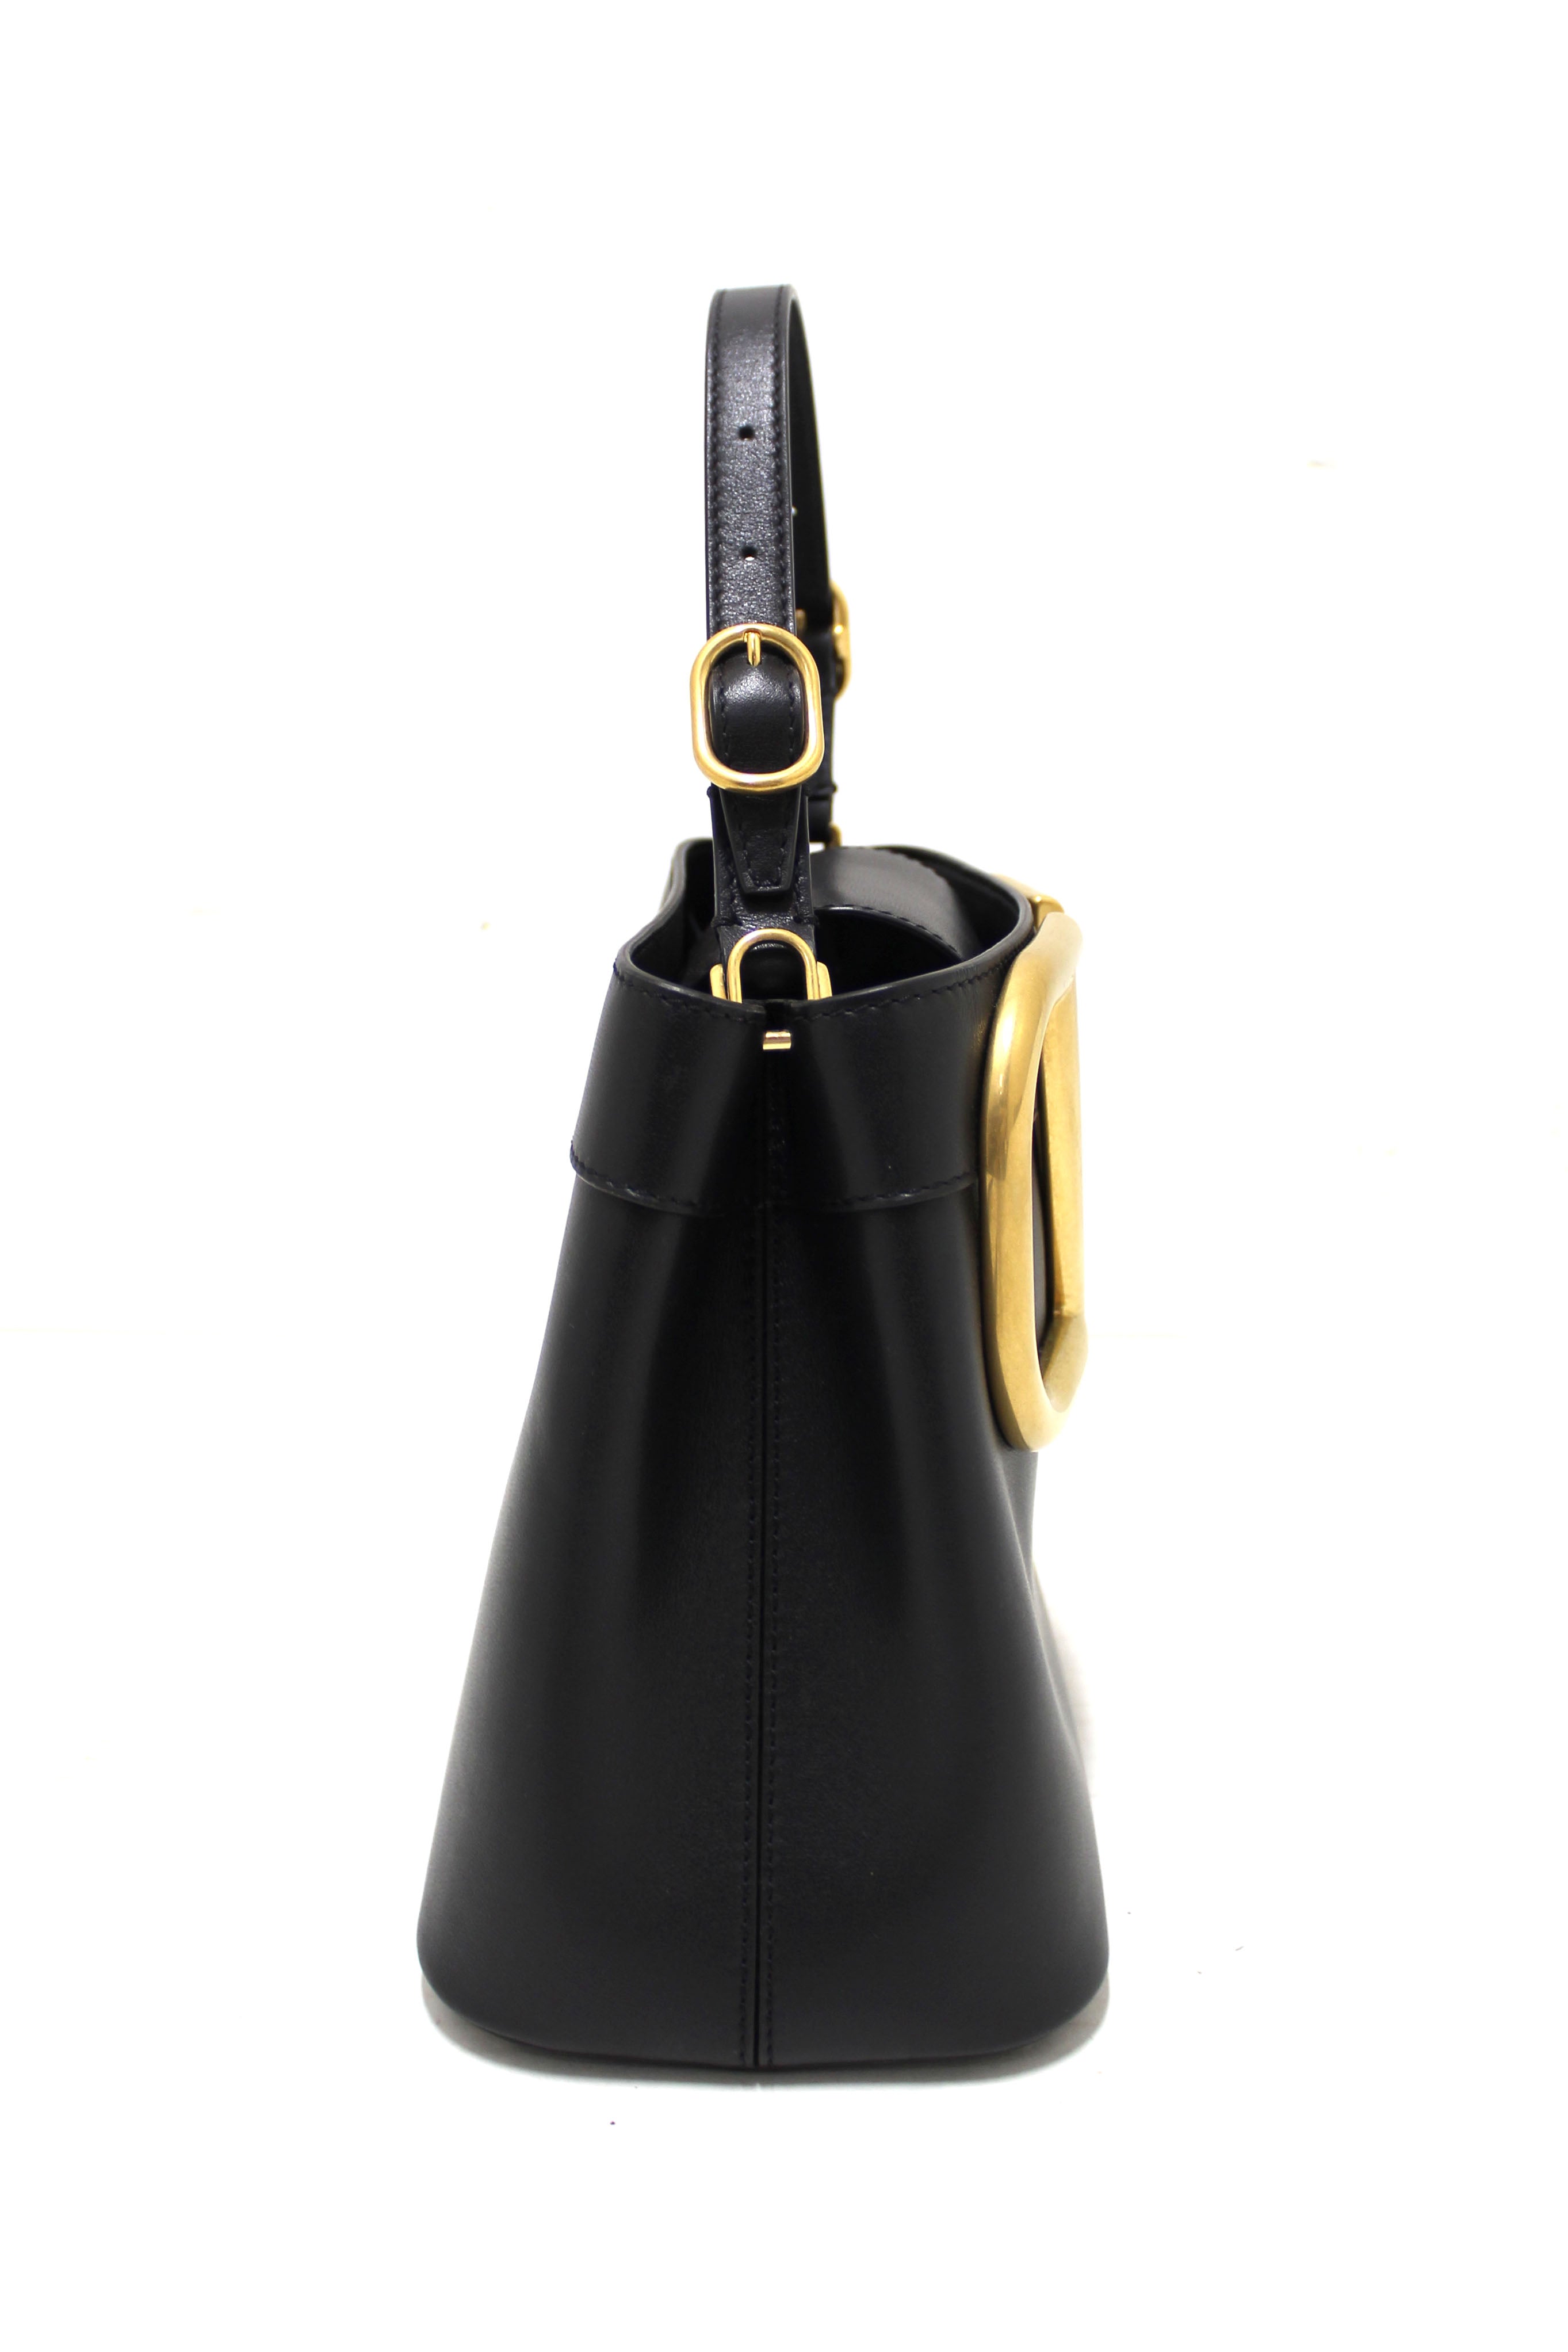 Authentic Valentino Garavani Black Leather Supervee Top Handle Bag